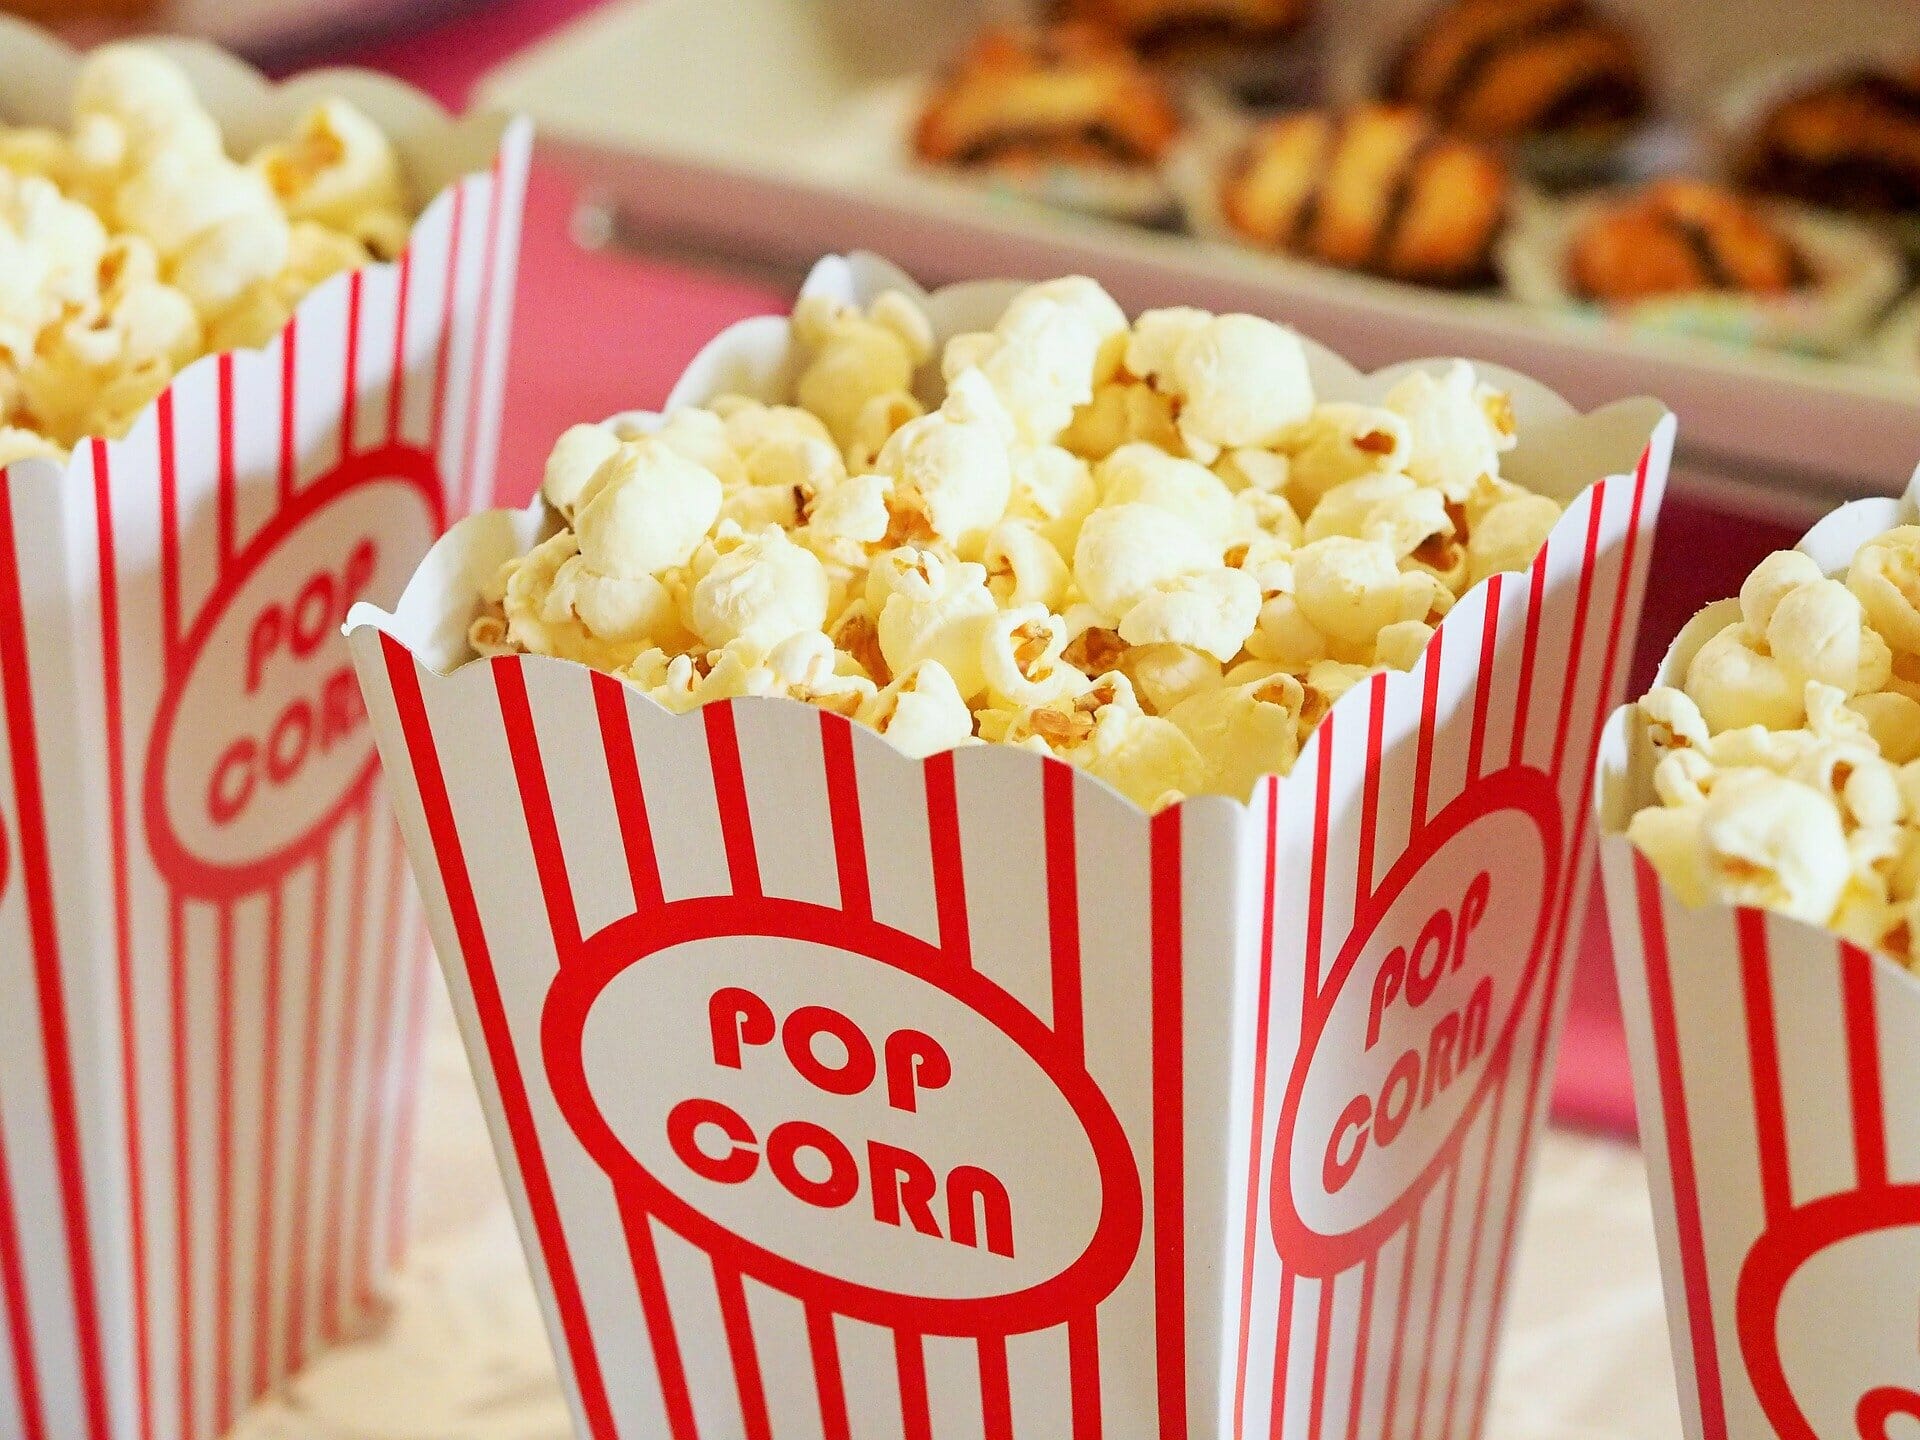 popcorn tubs to take to the cinema